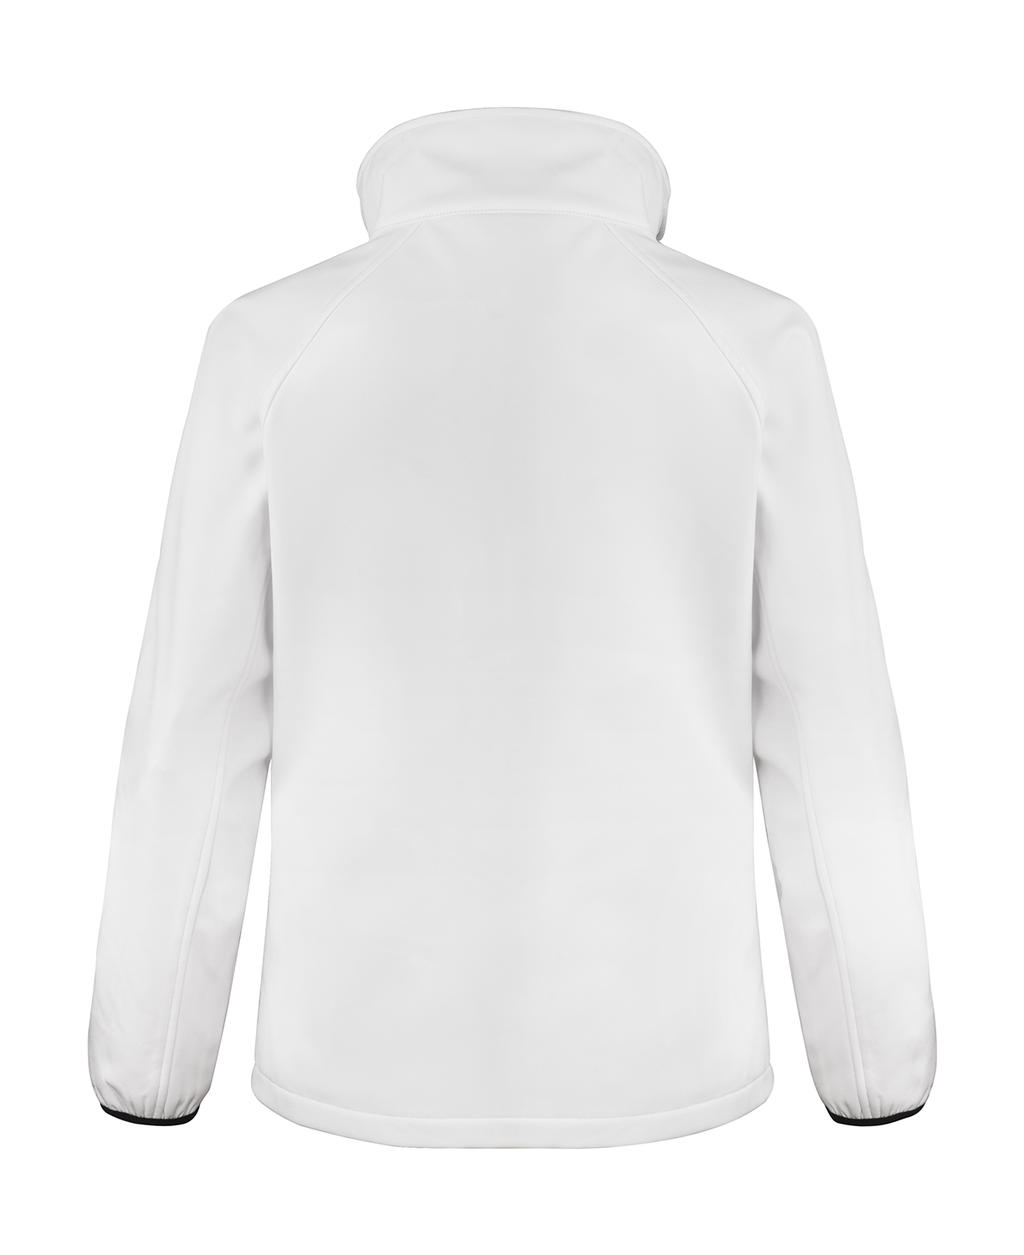  Ladies Printable Softshell Jacket in Farbe White/Black